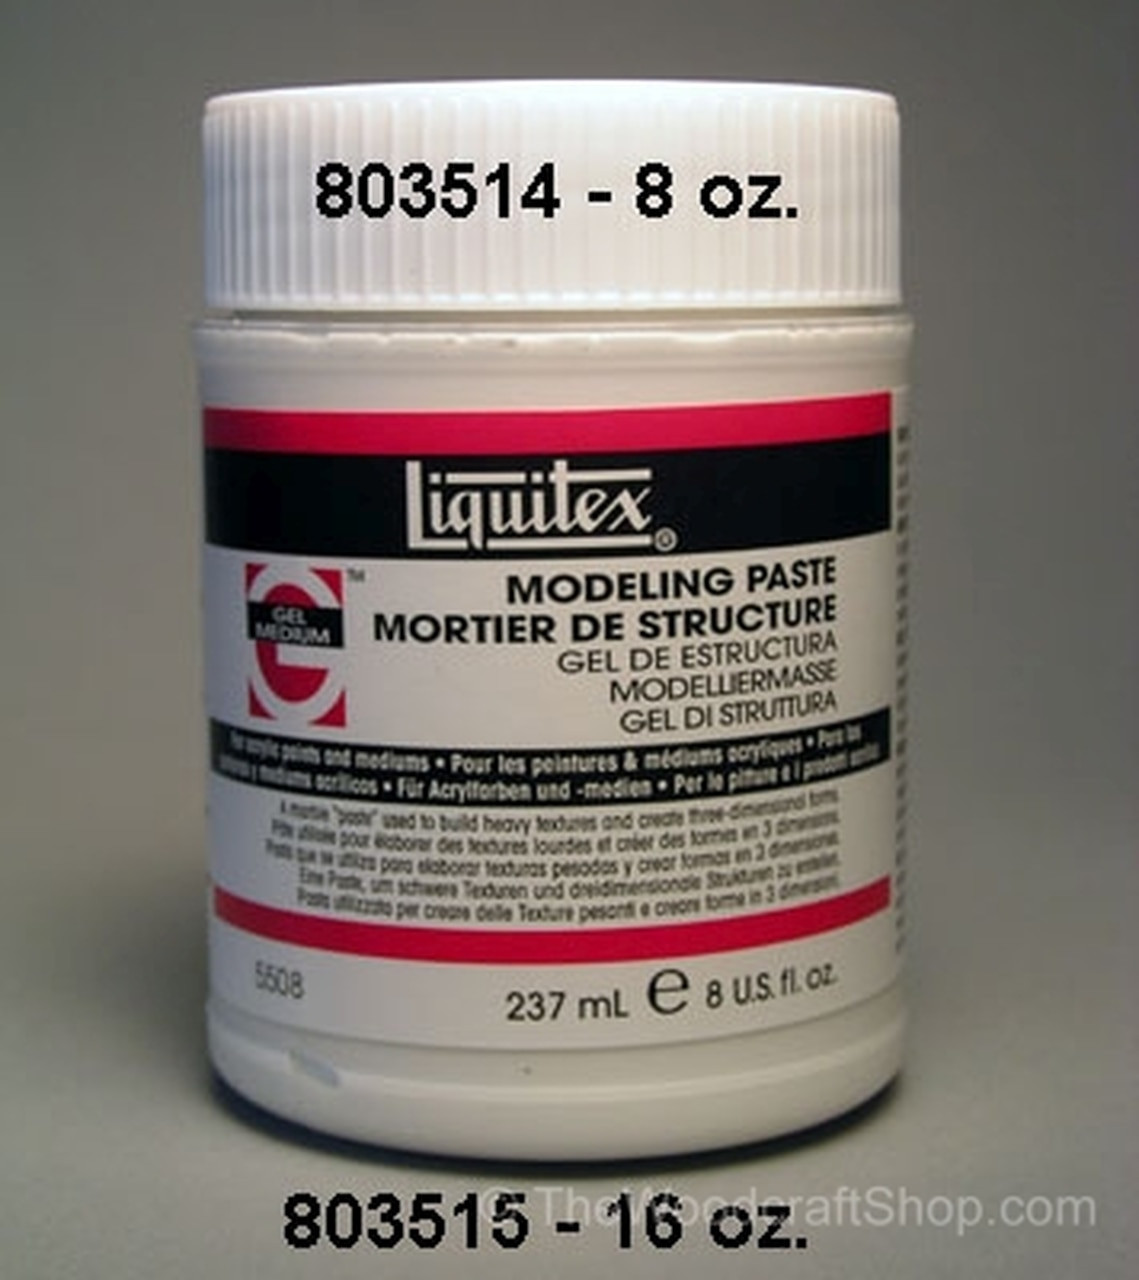 Liquitex Flexible Modeling Paste - 16 oz.